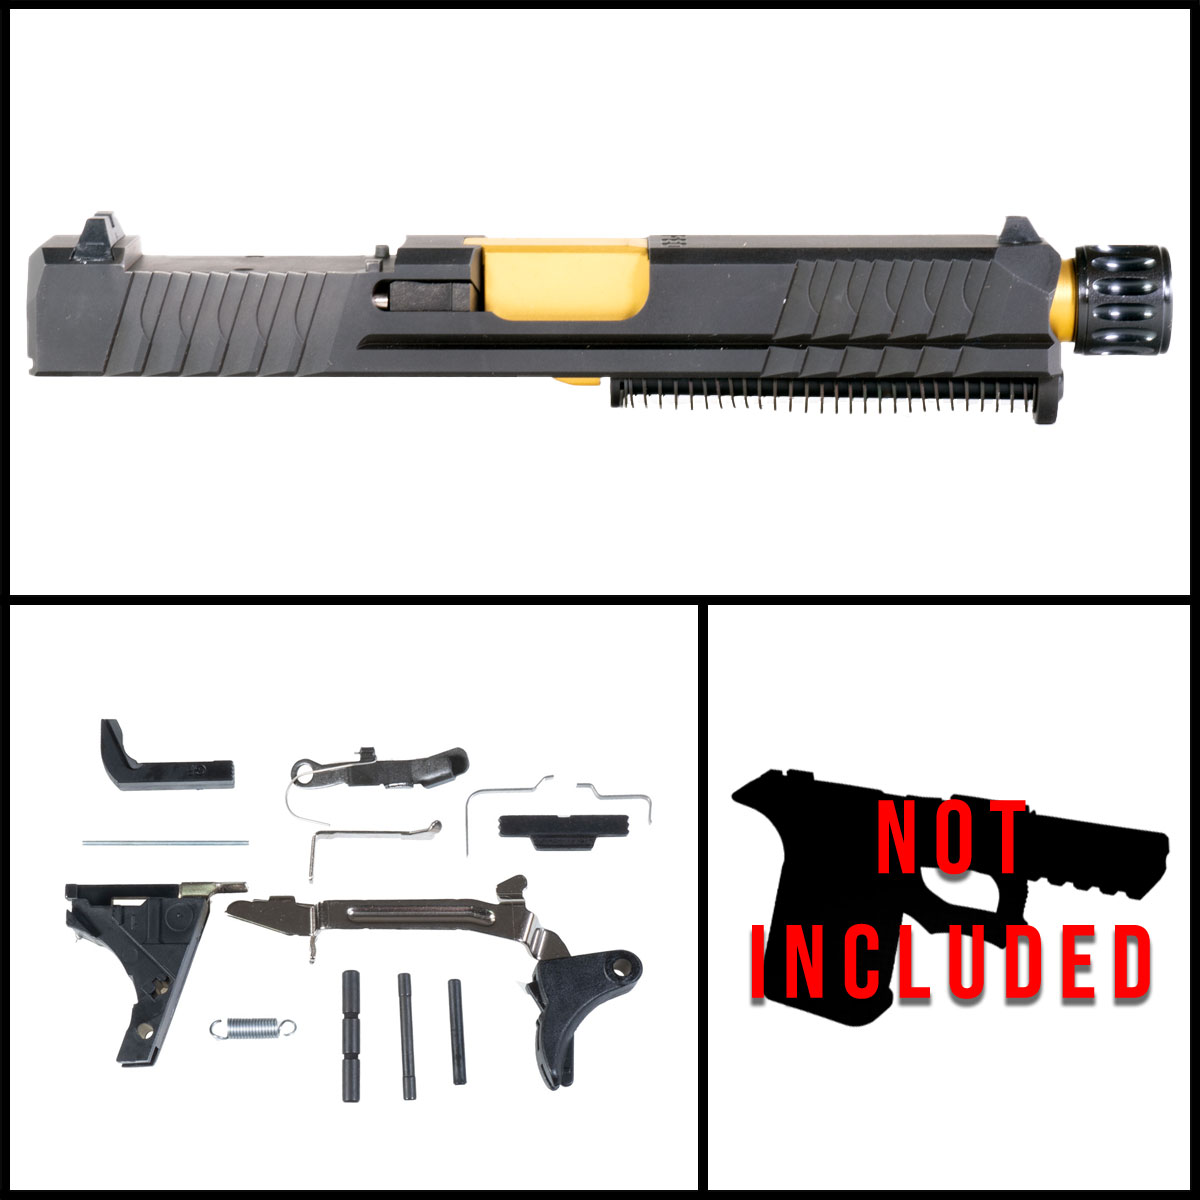 DTT 'Esplosione' 9mm Full Pistol Build Kit (Everything Minus Frame) - Glock 19 Gen 1-3 Compatible